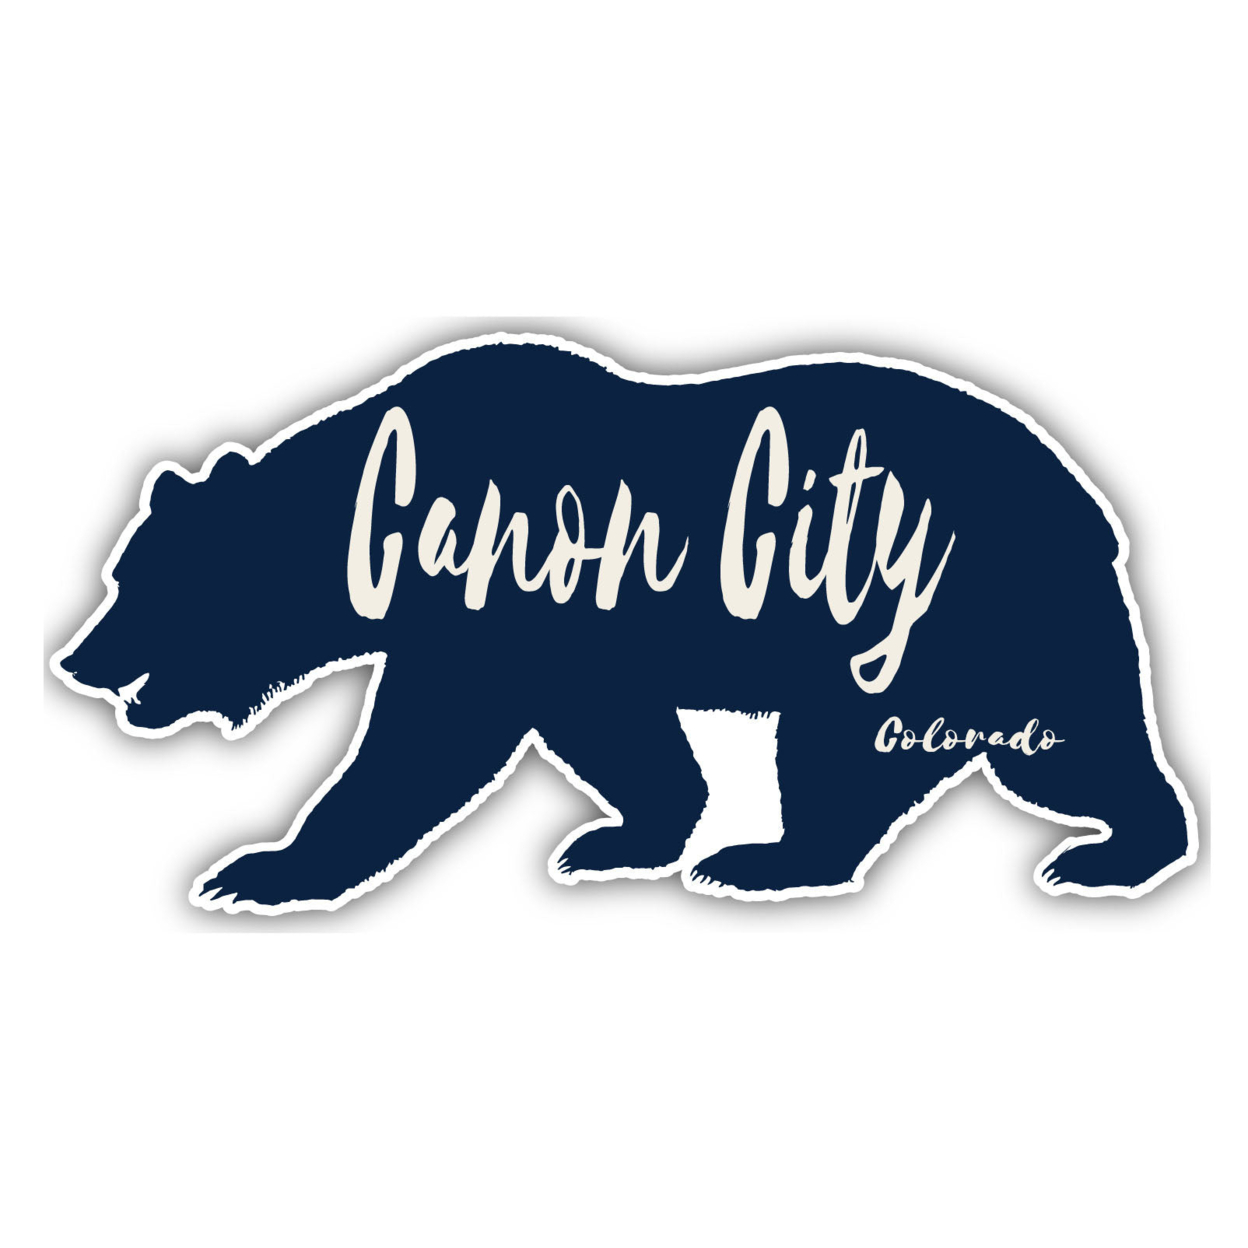 Canon City Colorado Souvenir Decorative Stickers (Choose Theme And Size) - Single Unit, 10-Inch, Tent